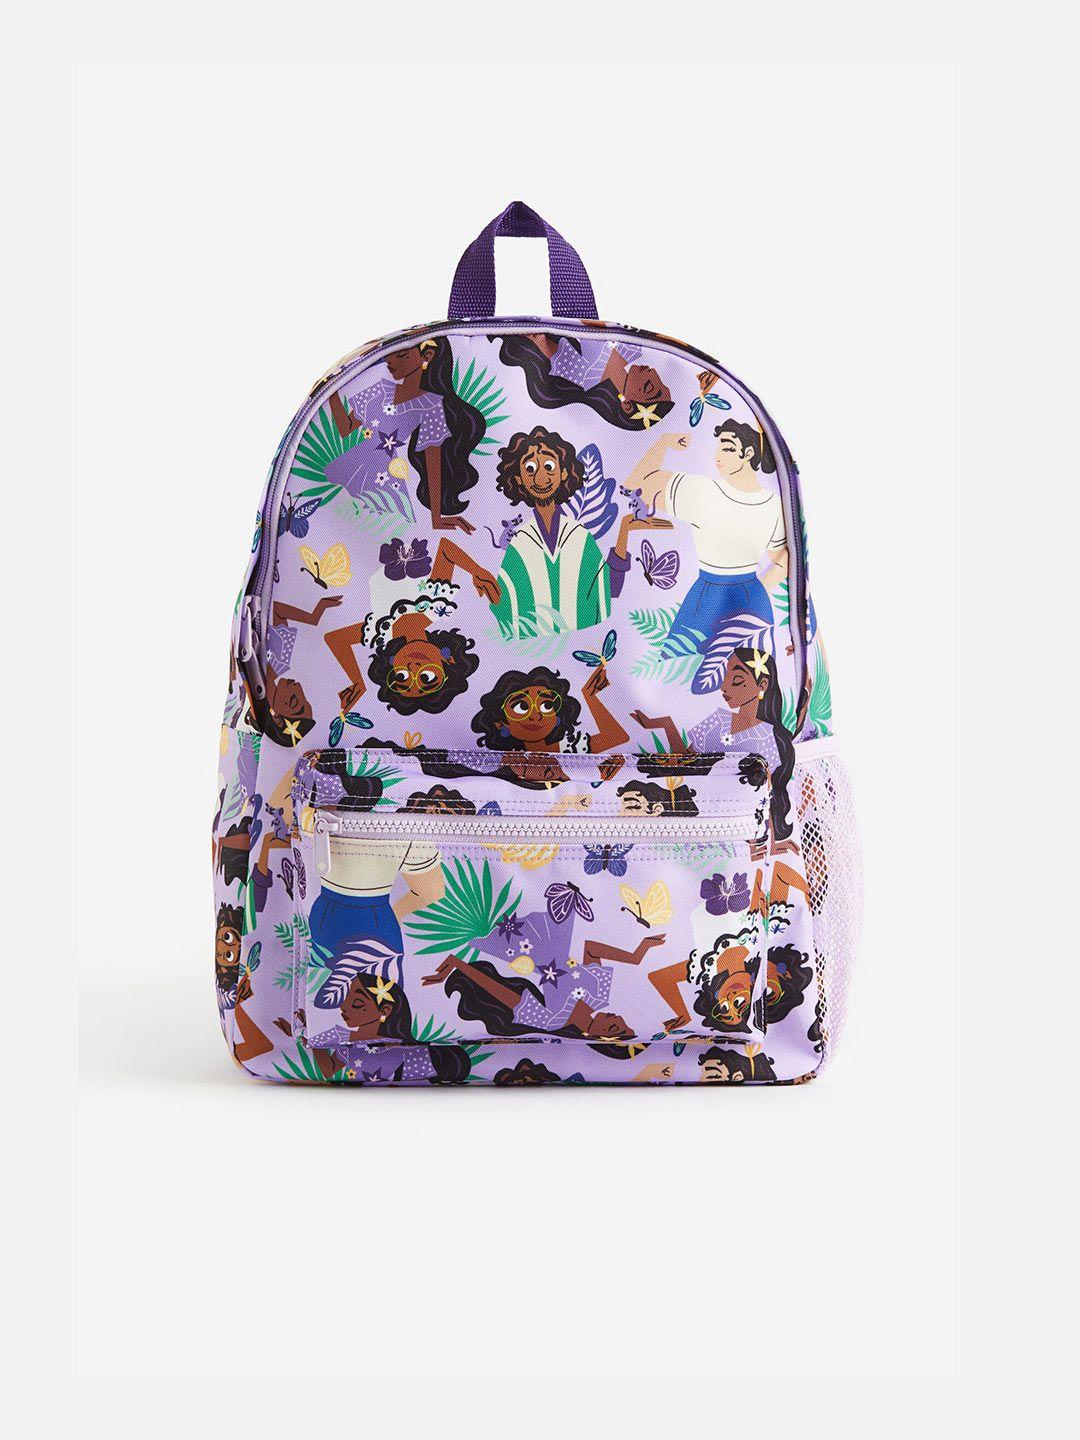 h&m boys backpack